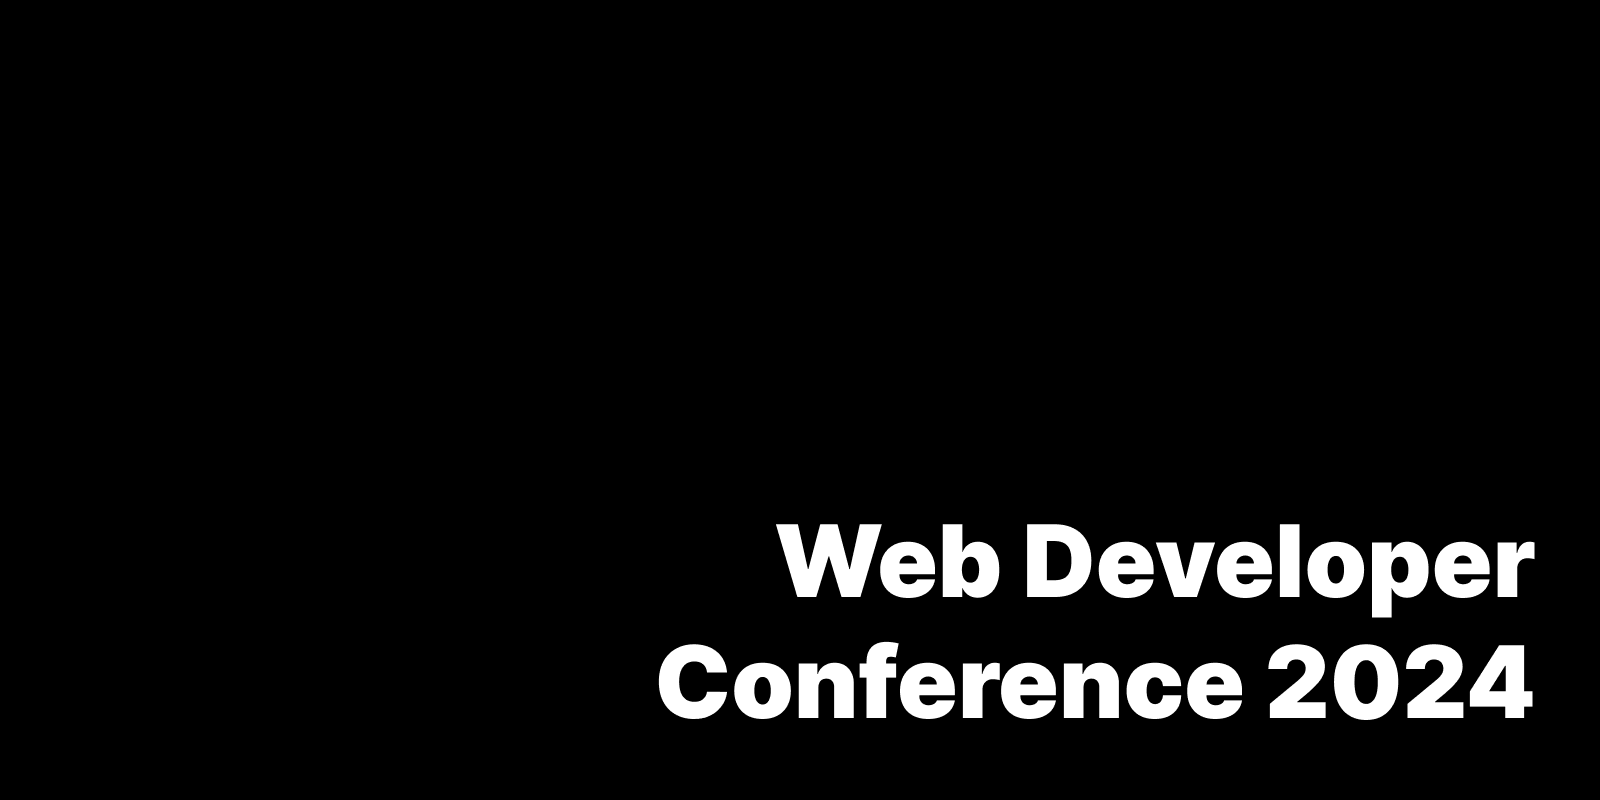 Web Developer Conference 2024